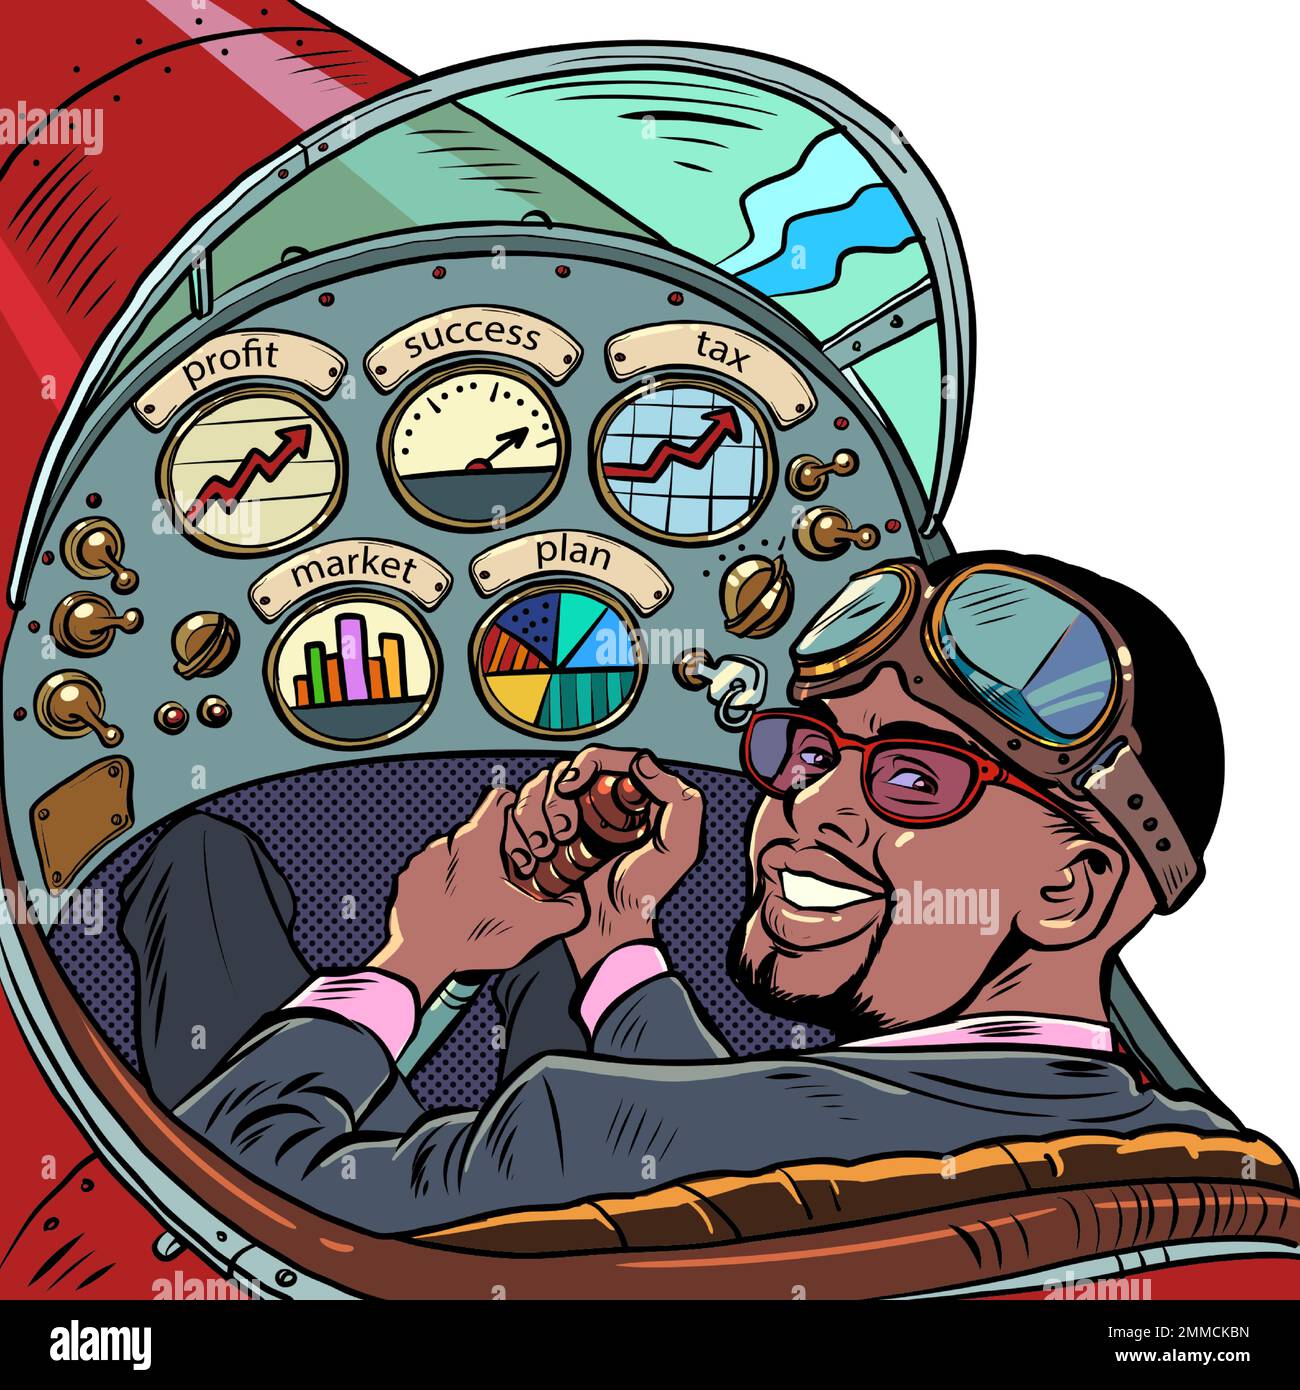 Cockpit eines Retro-Flugzeugs, führt der afroamerikanische Pilot das Flugzeug. Pilotenberuf. Pop Art retro Vektor Illustration 50s 60s Stil kitschig V Stock Vektor